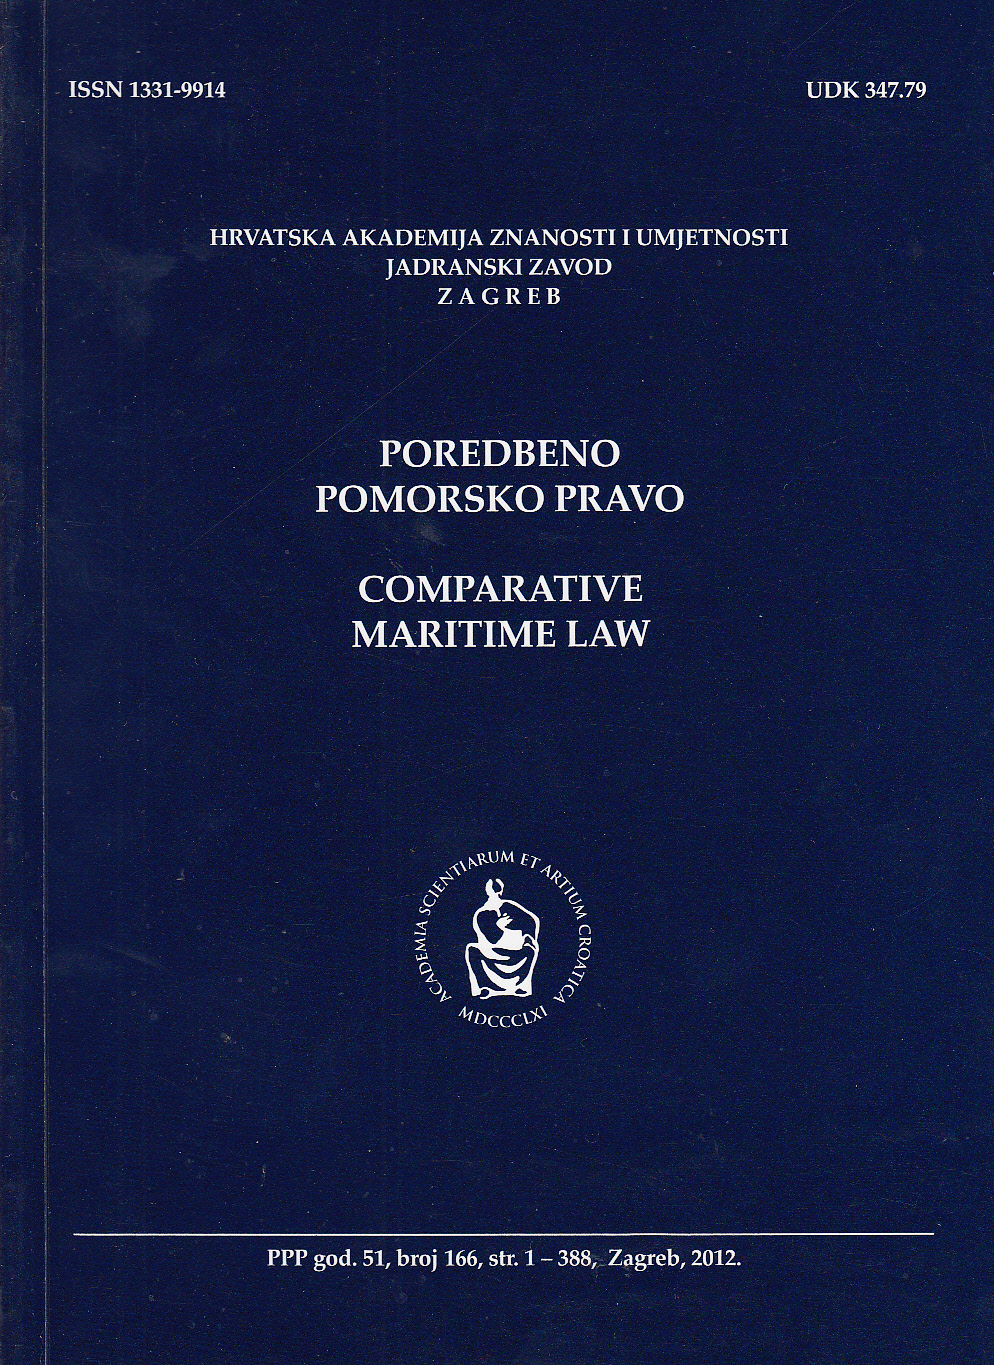 Međunarodno pravo 1 ; 2 ; 3 [= International law] (authors J. Andrassy et al.) (Zagreb, 2010 ; 2012 ; 2006) : [books review] Cover Image